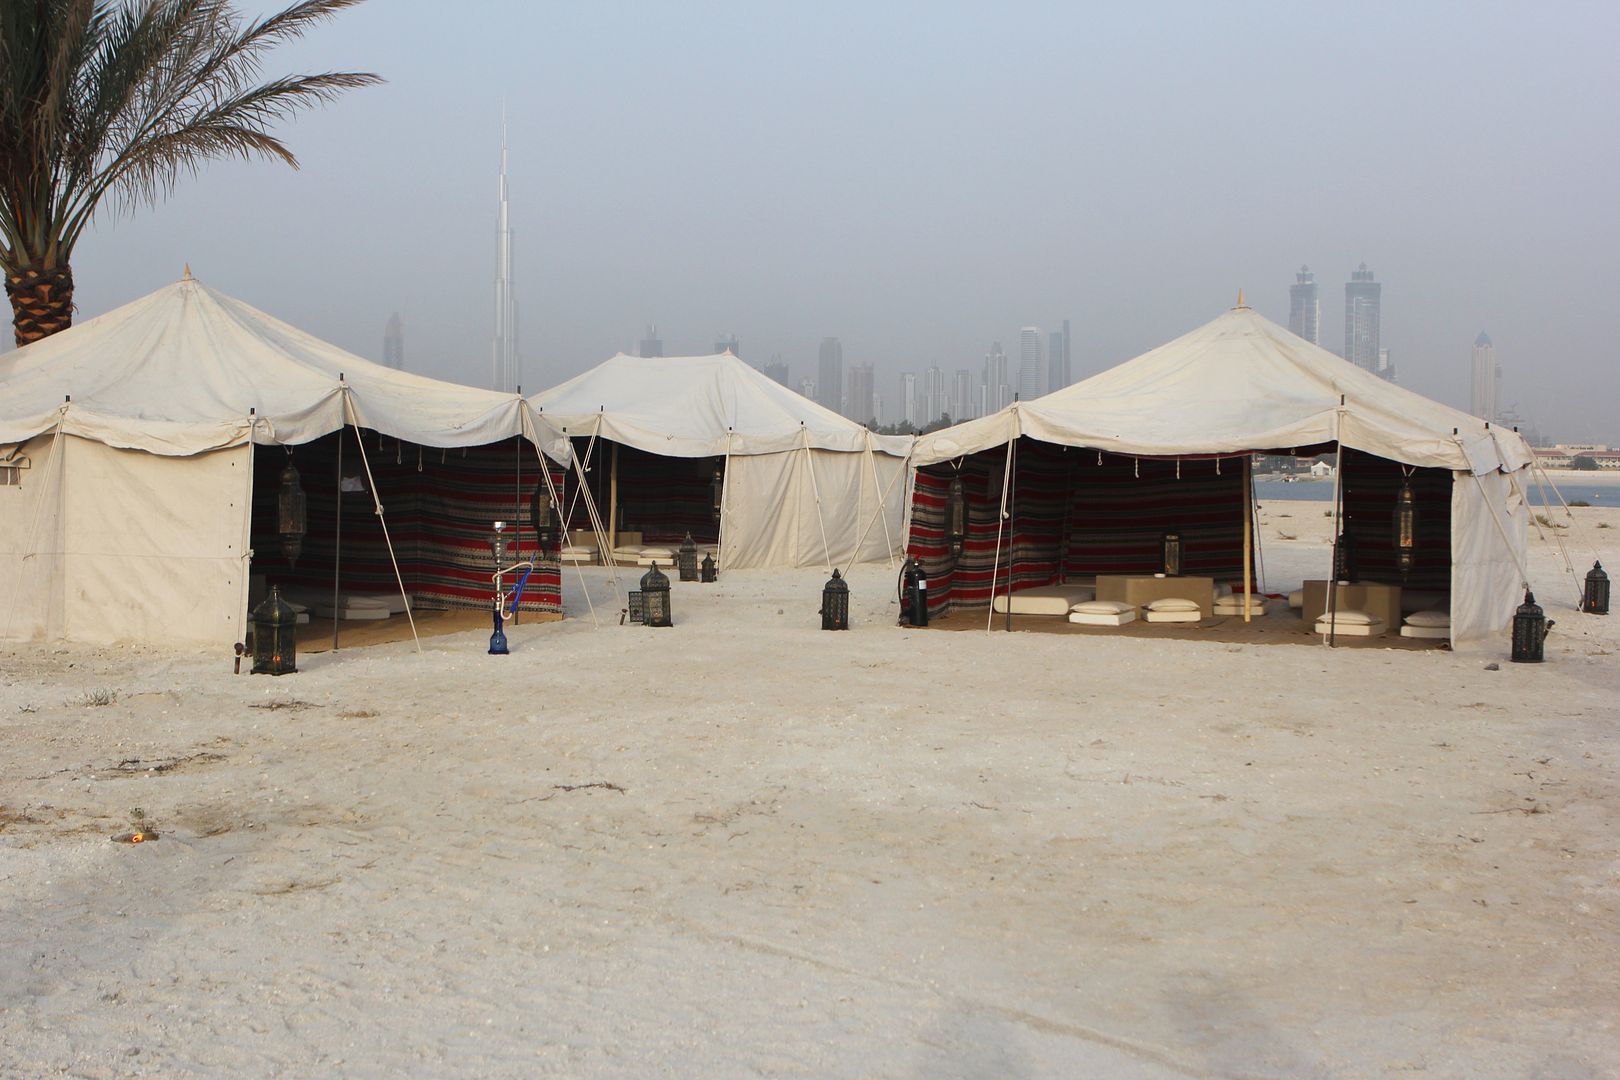  photo tents-may-chanelcruisedubai-beckermangirls-beckermanblog-desert-isalnd.jpg